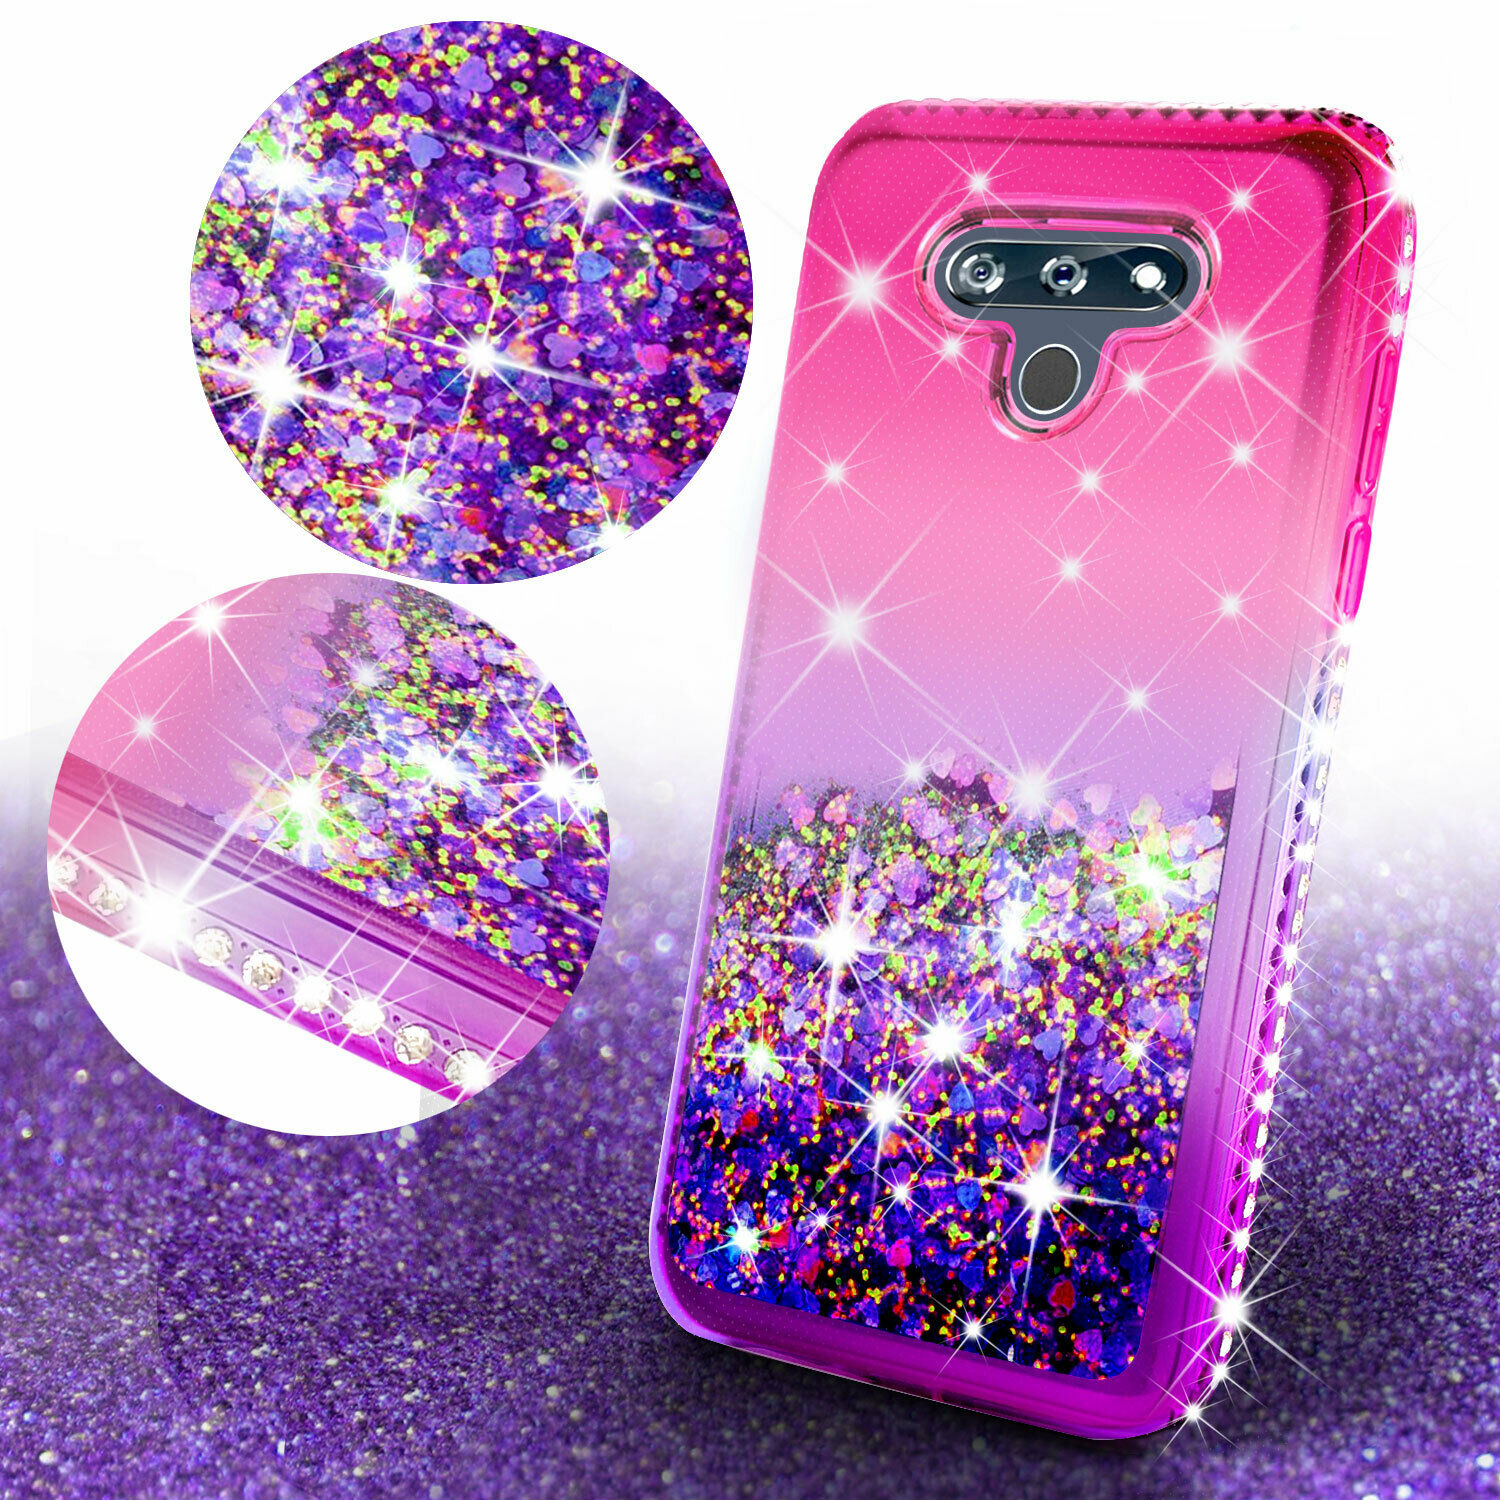 LG LG Harmony 4, Premier Pro Plus L455DL Case w[Temper Glass] Cute Liquid Glitter Bling Diamond Bumper Girls Women Phone Case for LG LG Harmony 4, Premier Pro Plus L455DL - Pink/Purple - image 3 of 5